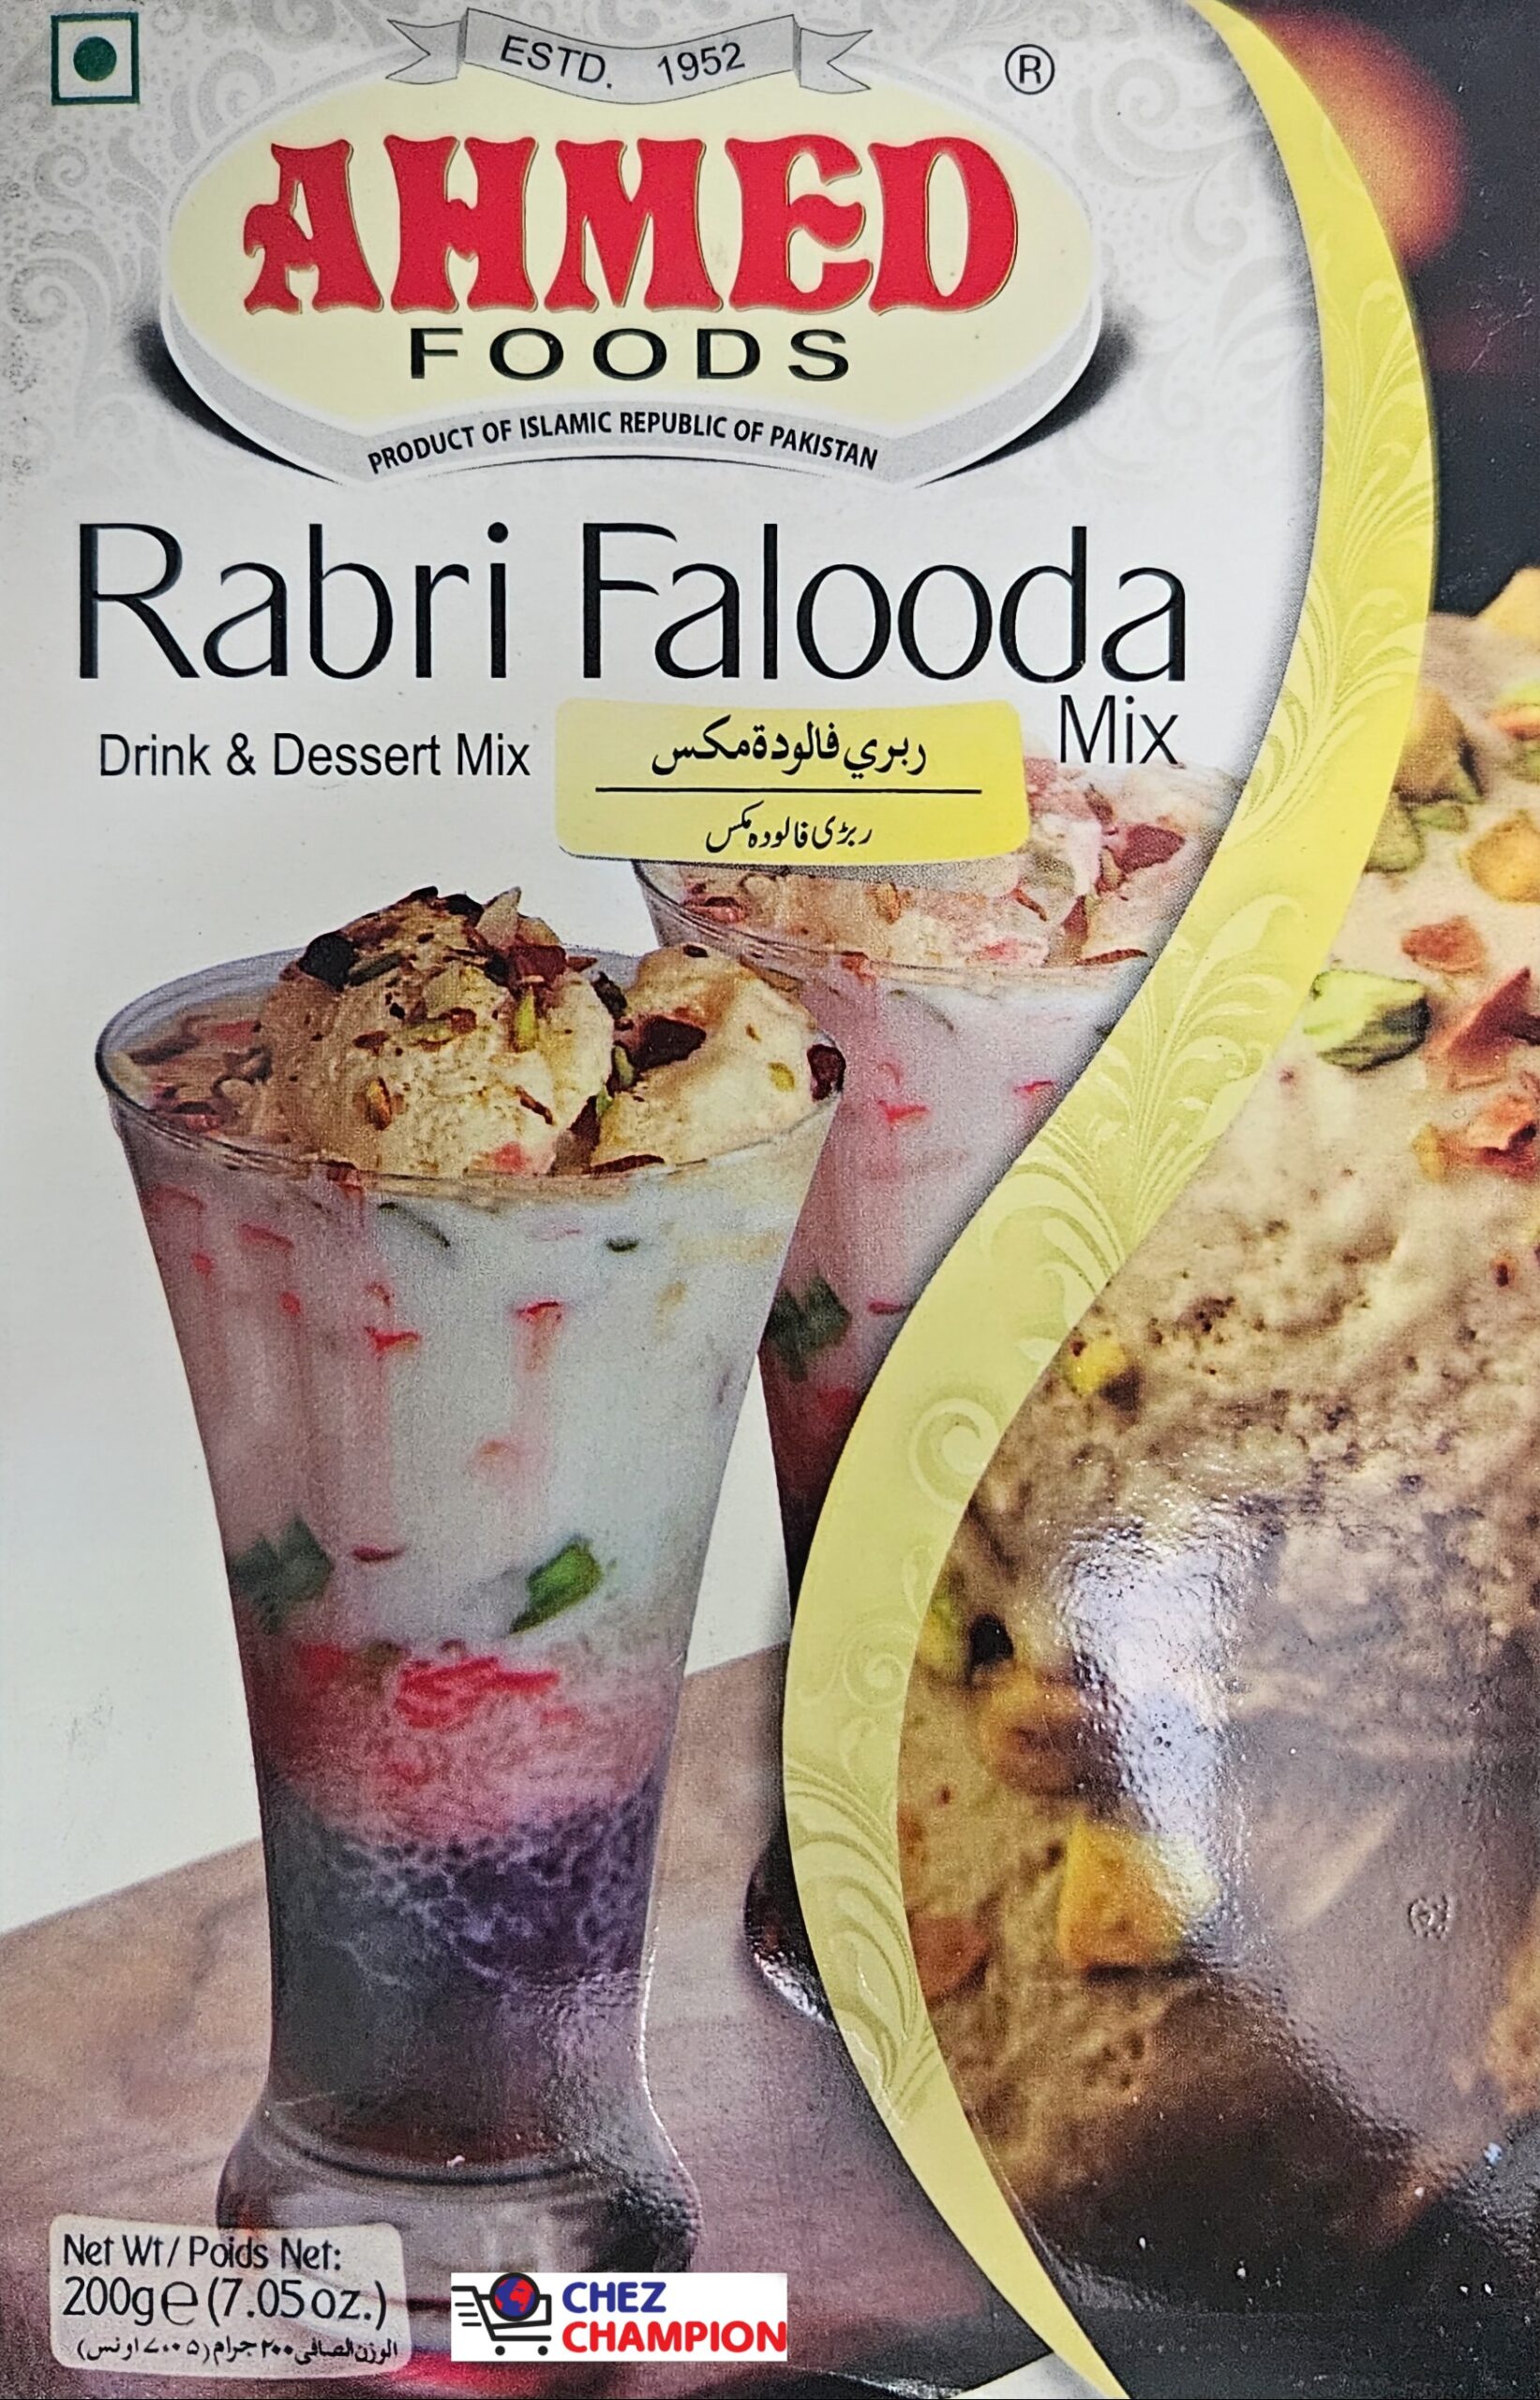 Ahmed rabri falooda mix – drink and dessert mix – 200g